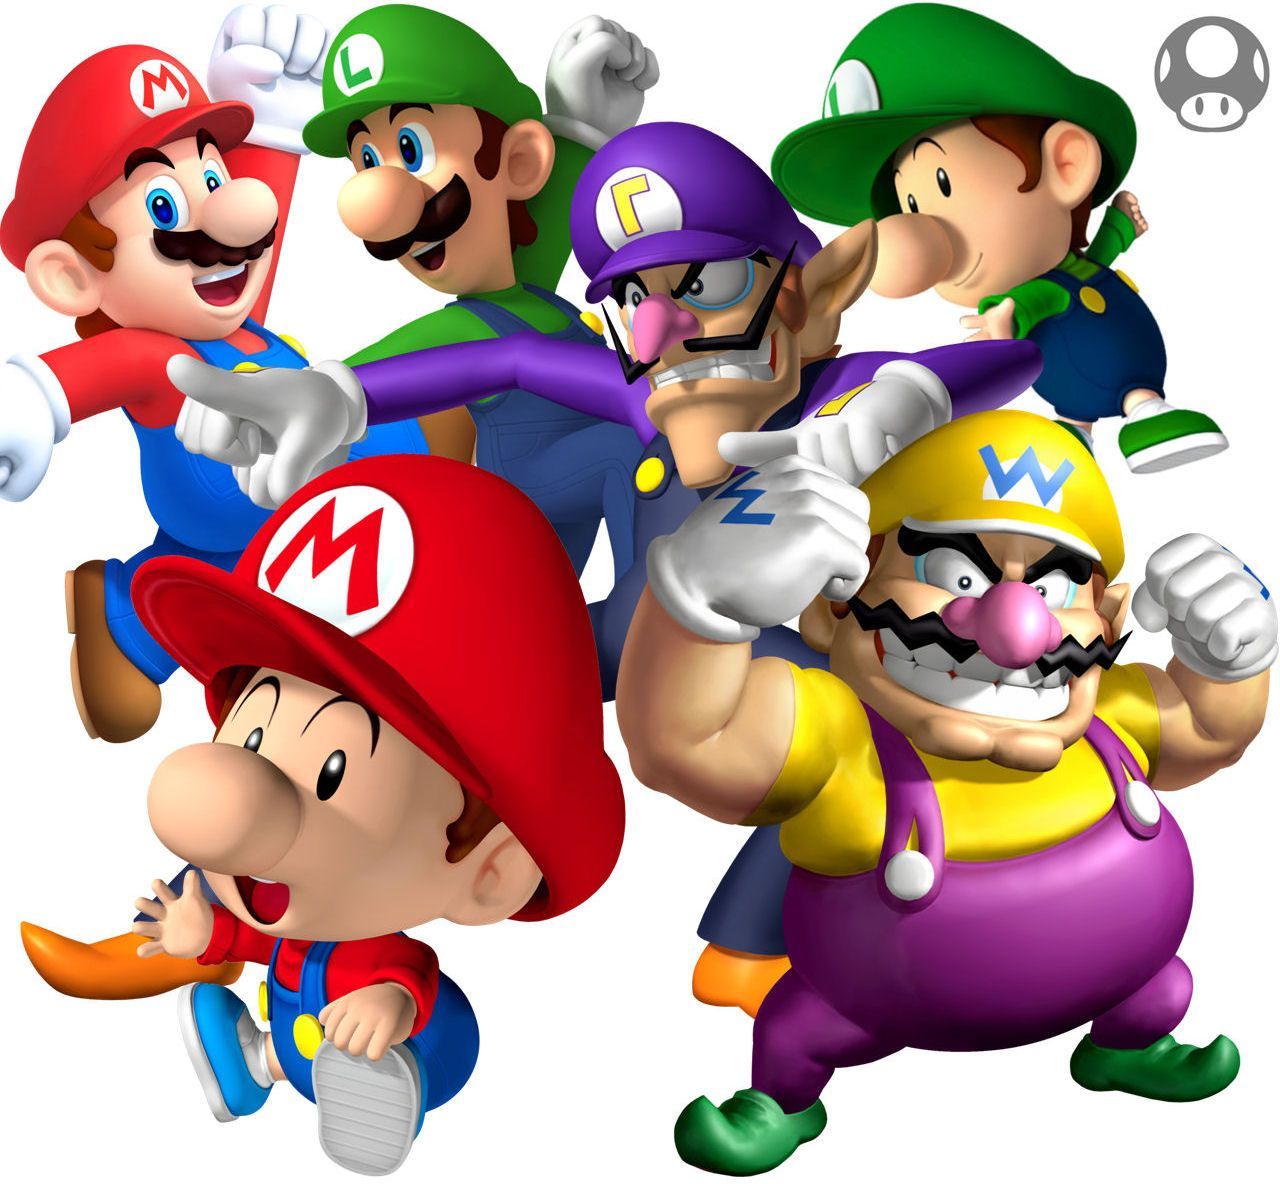 Baby Mario, Mario, Luigi, Waluigi, Baby Luigi & Wario. Mario, New